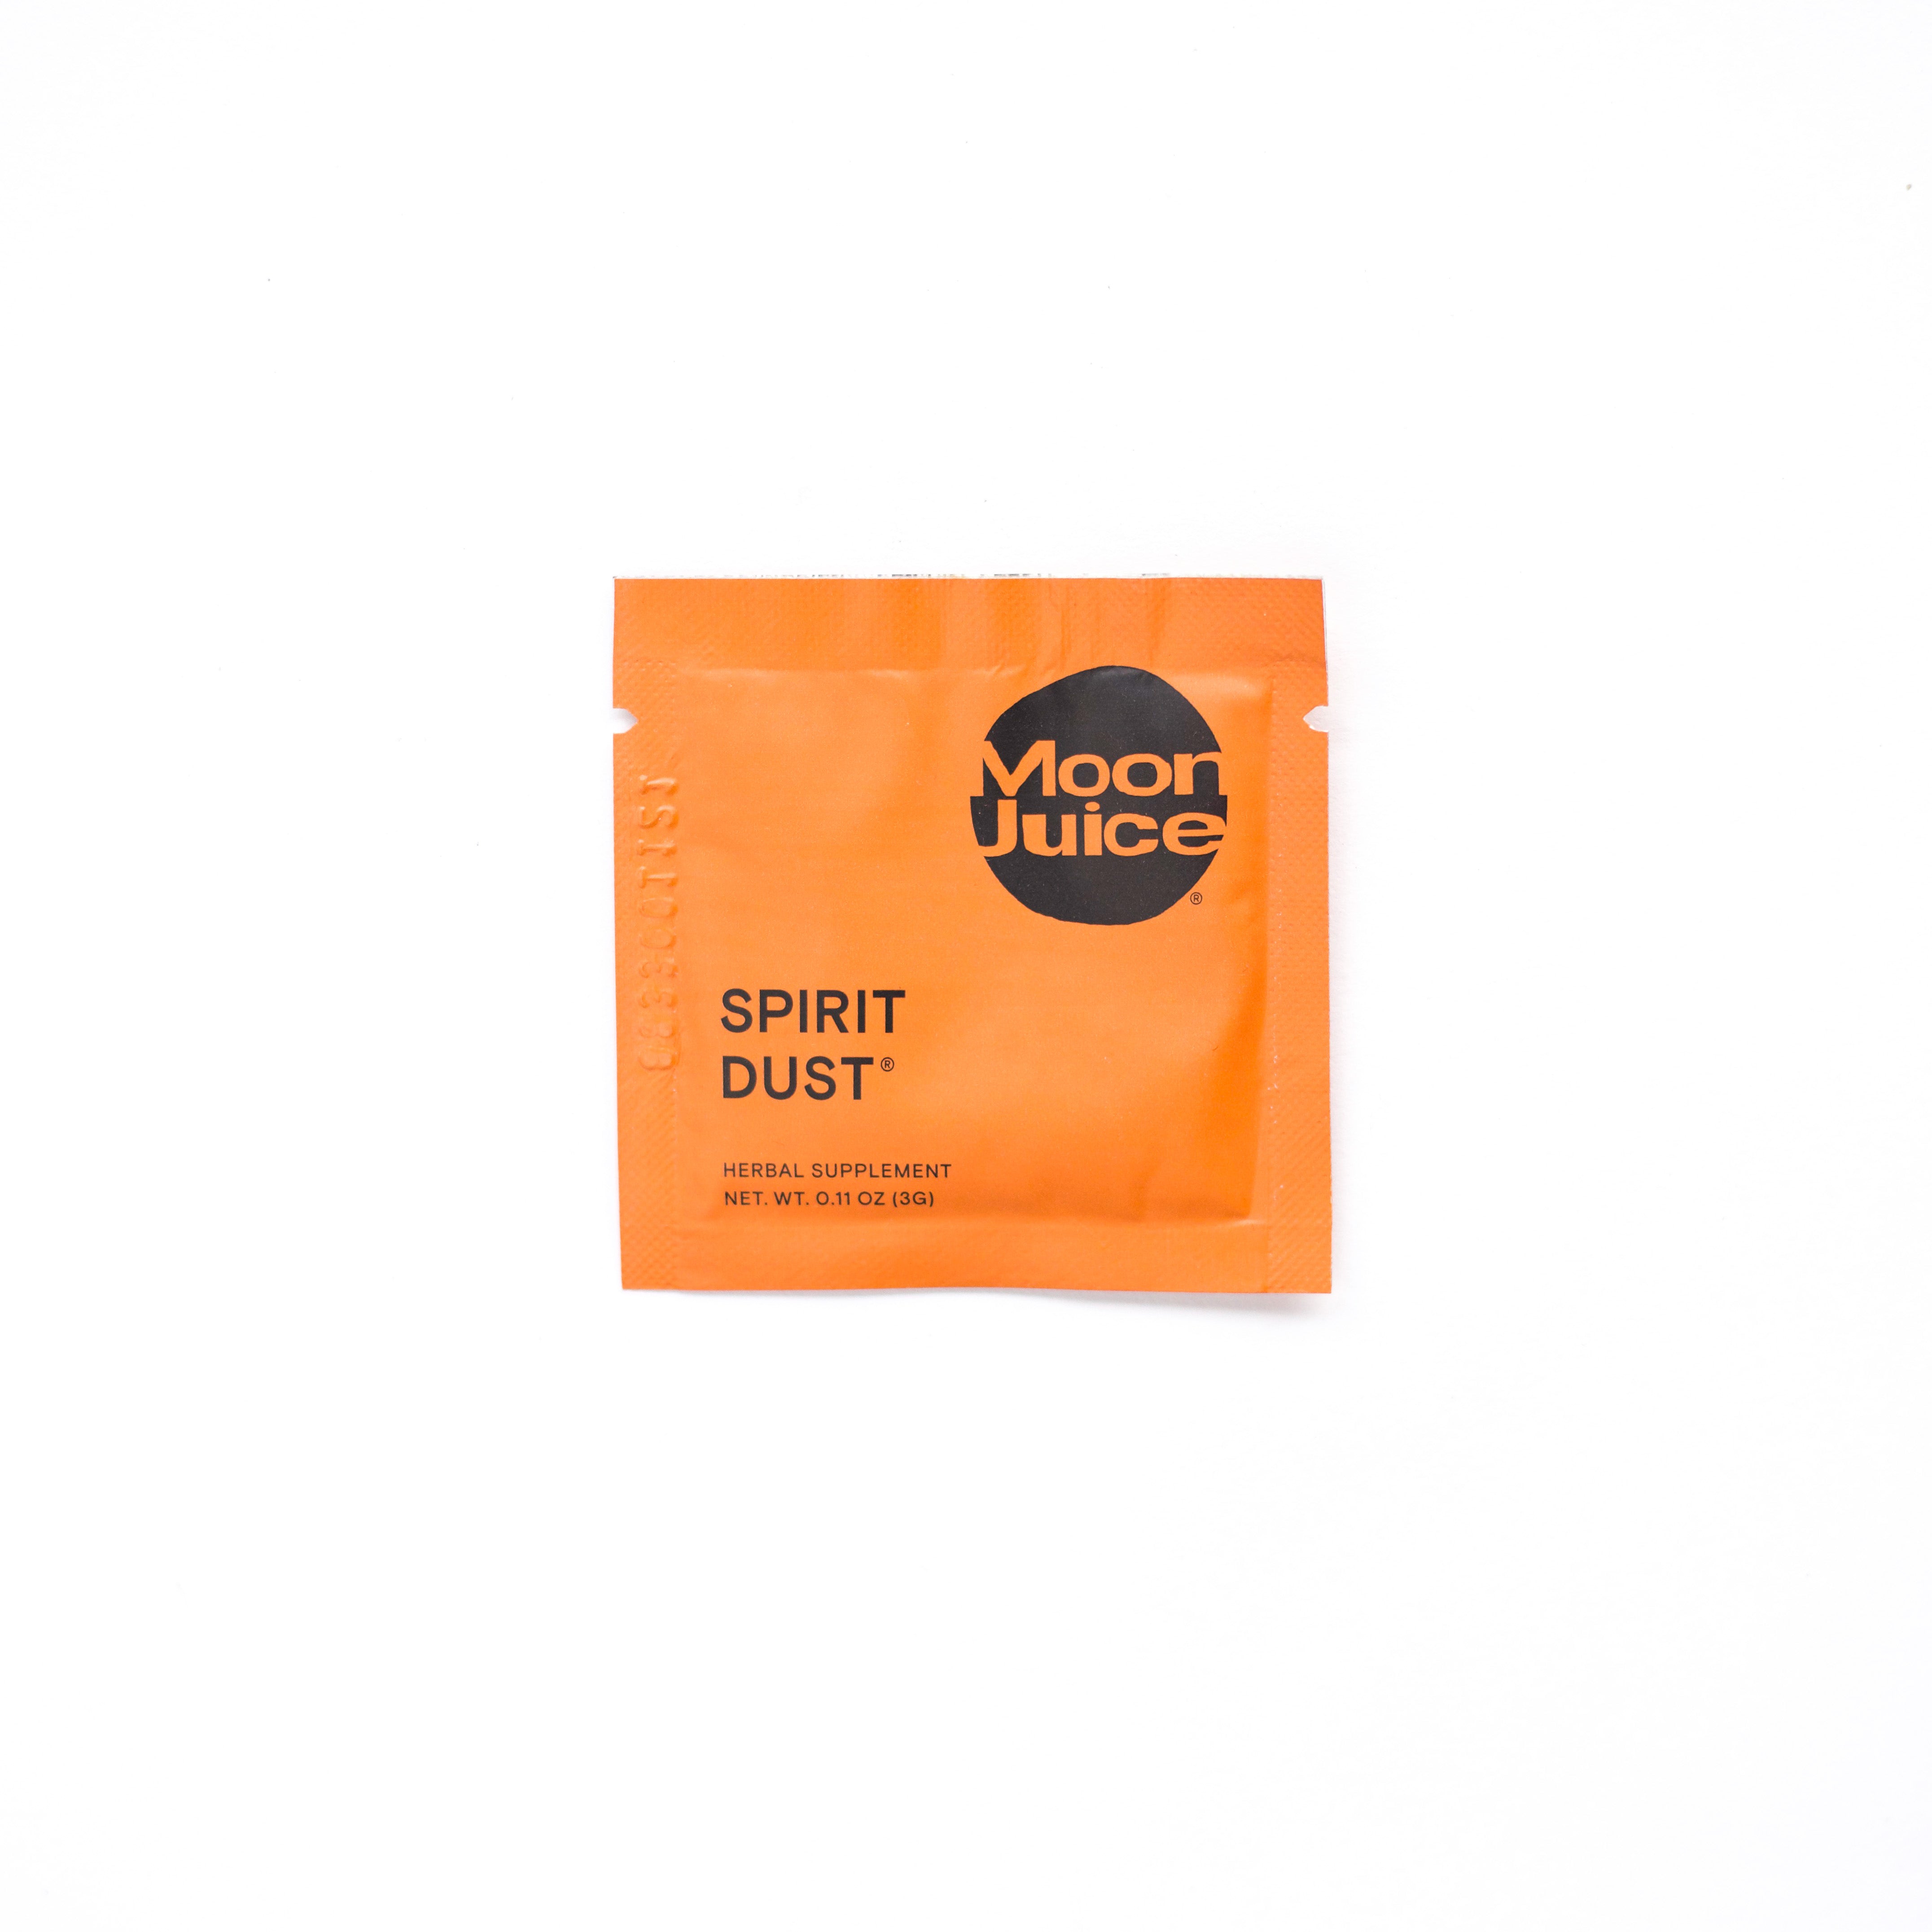 Orange square packet of "Sprit Dust"